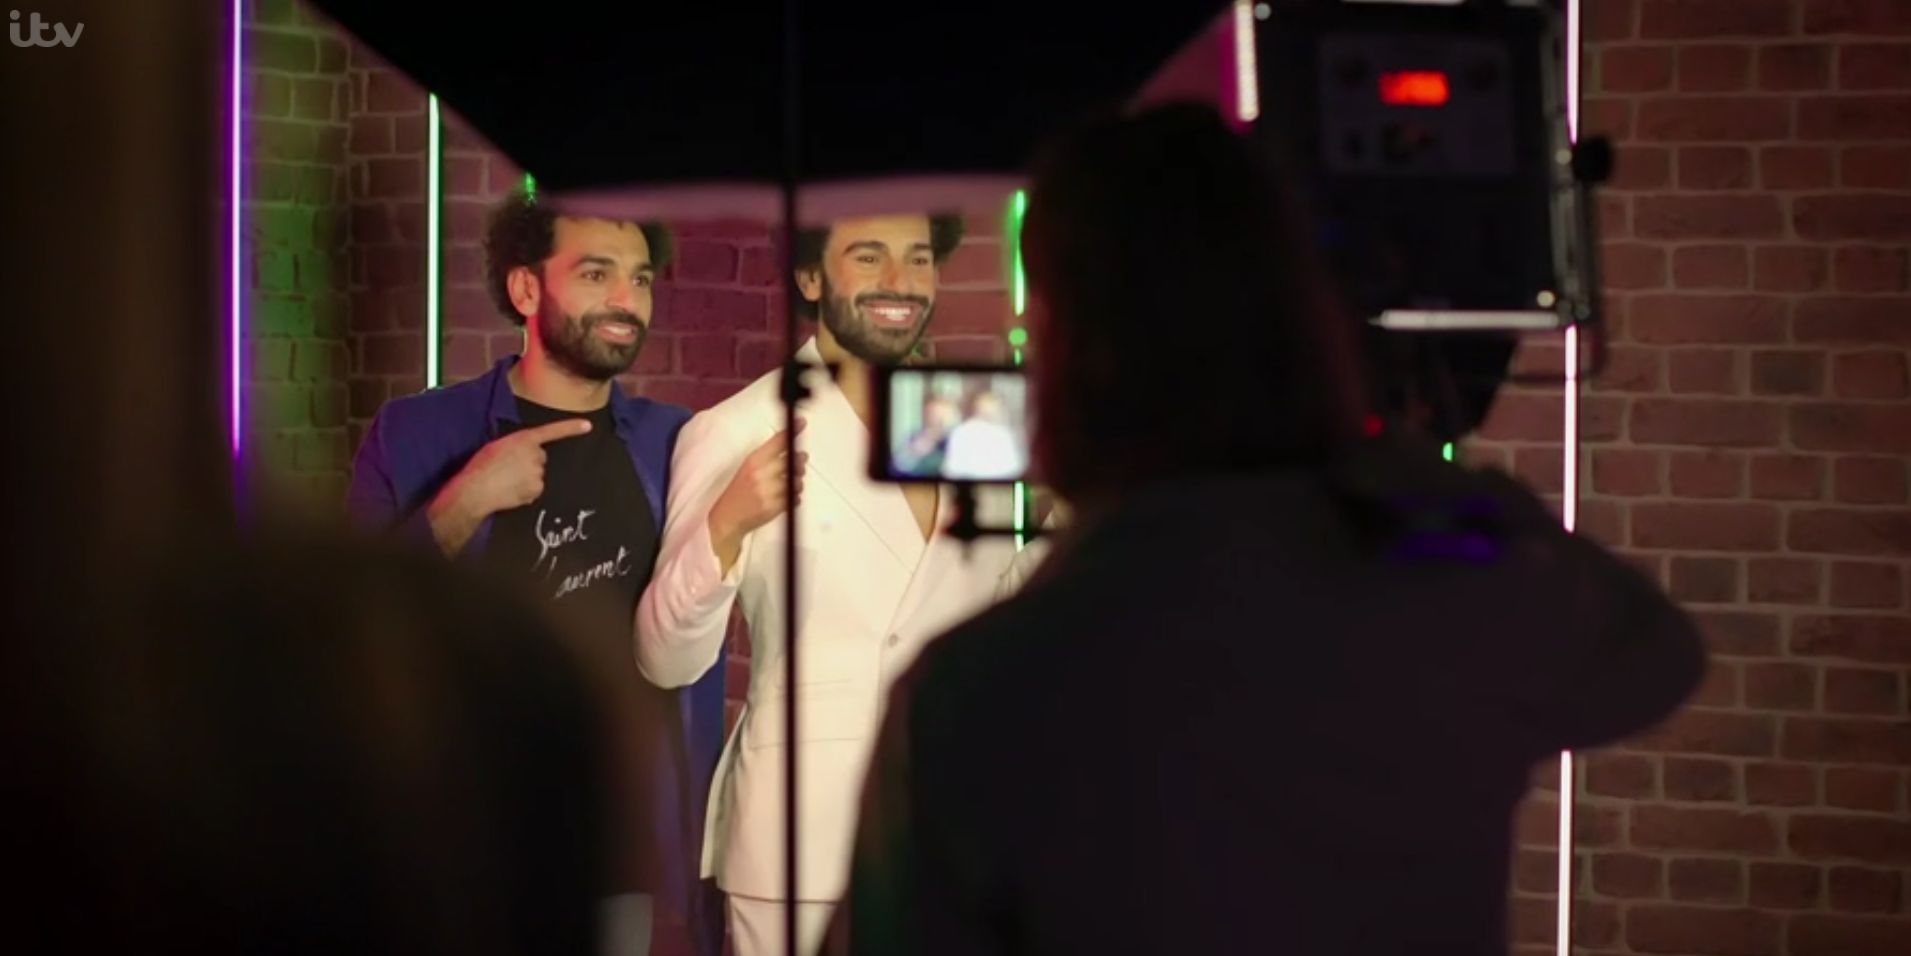 (Video) Mo Salah features on ITV documentary alongside his waxwork model